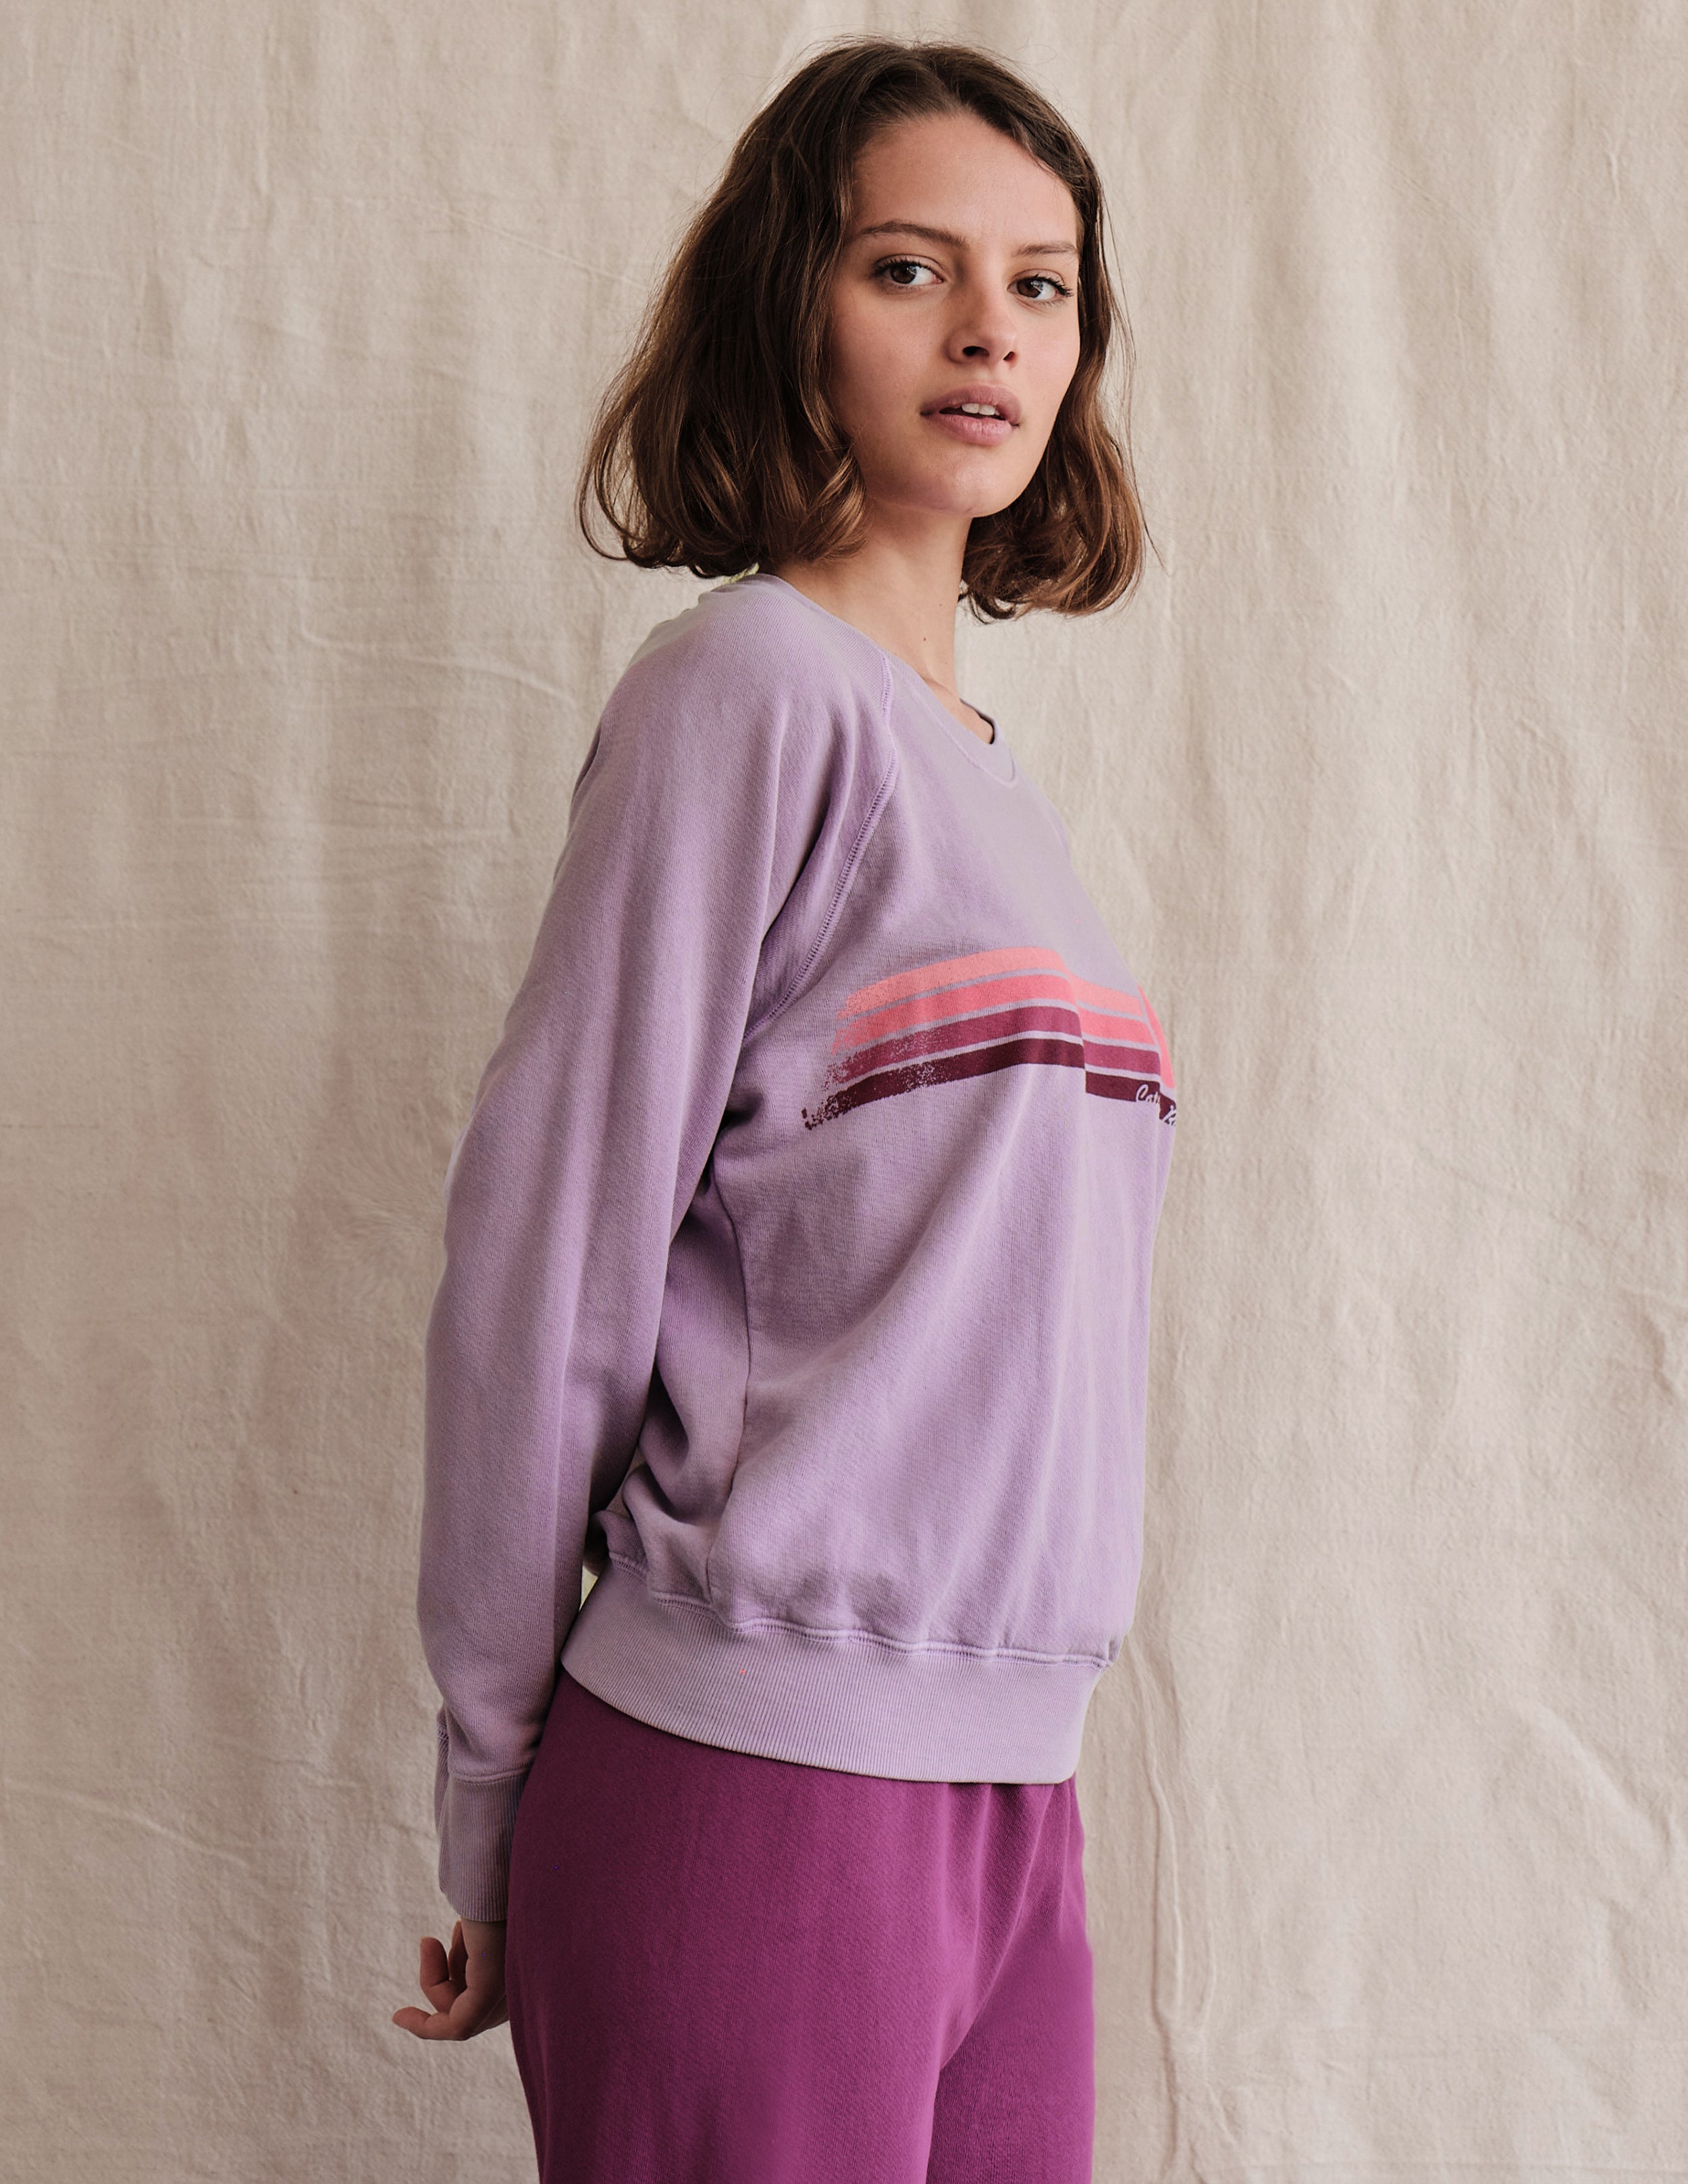 Rainbow Sweatshirt - Lavender